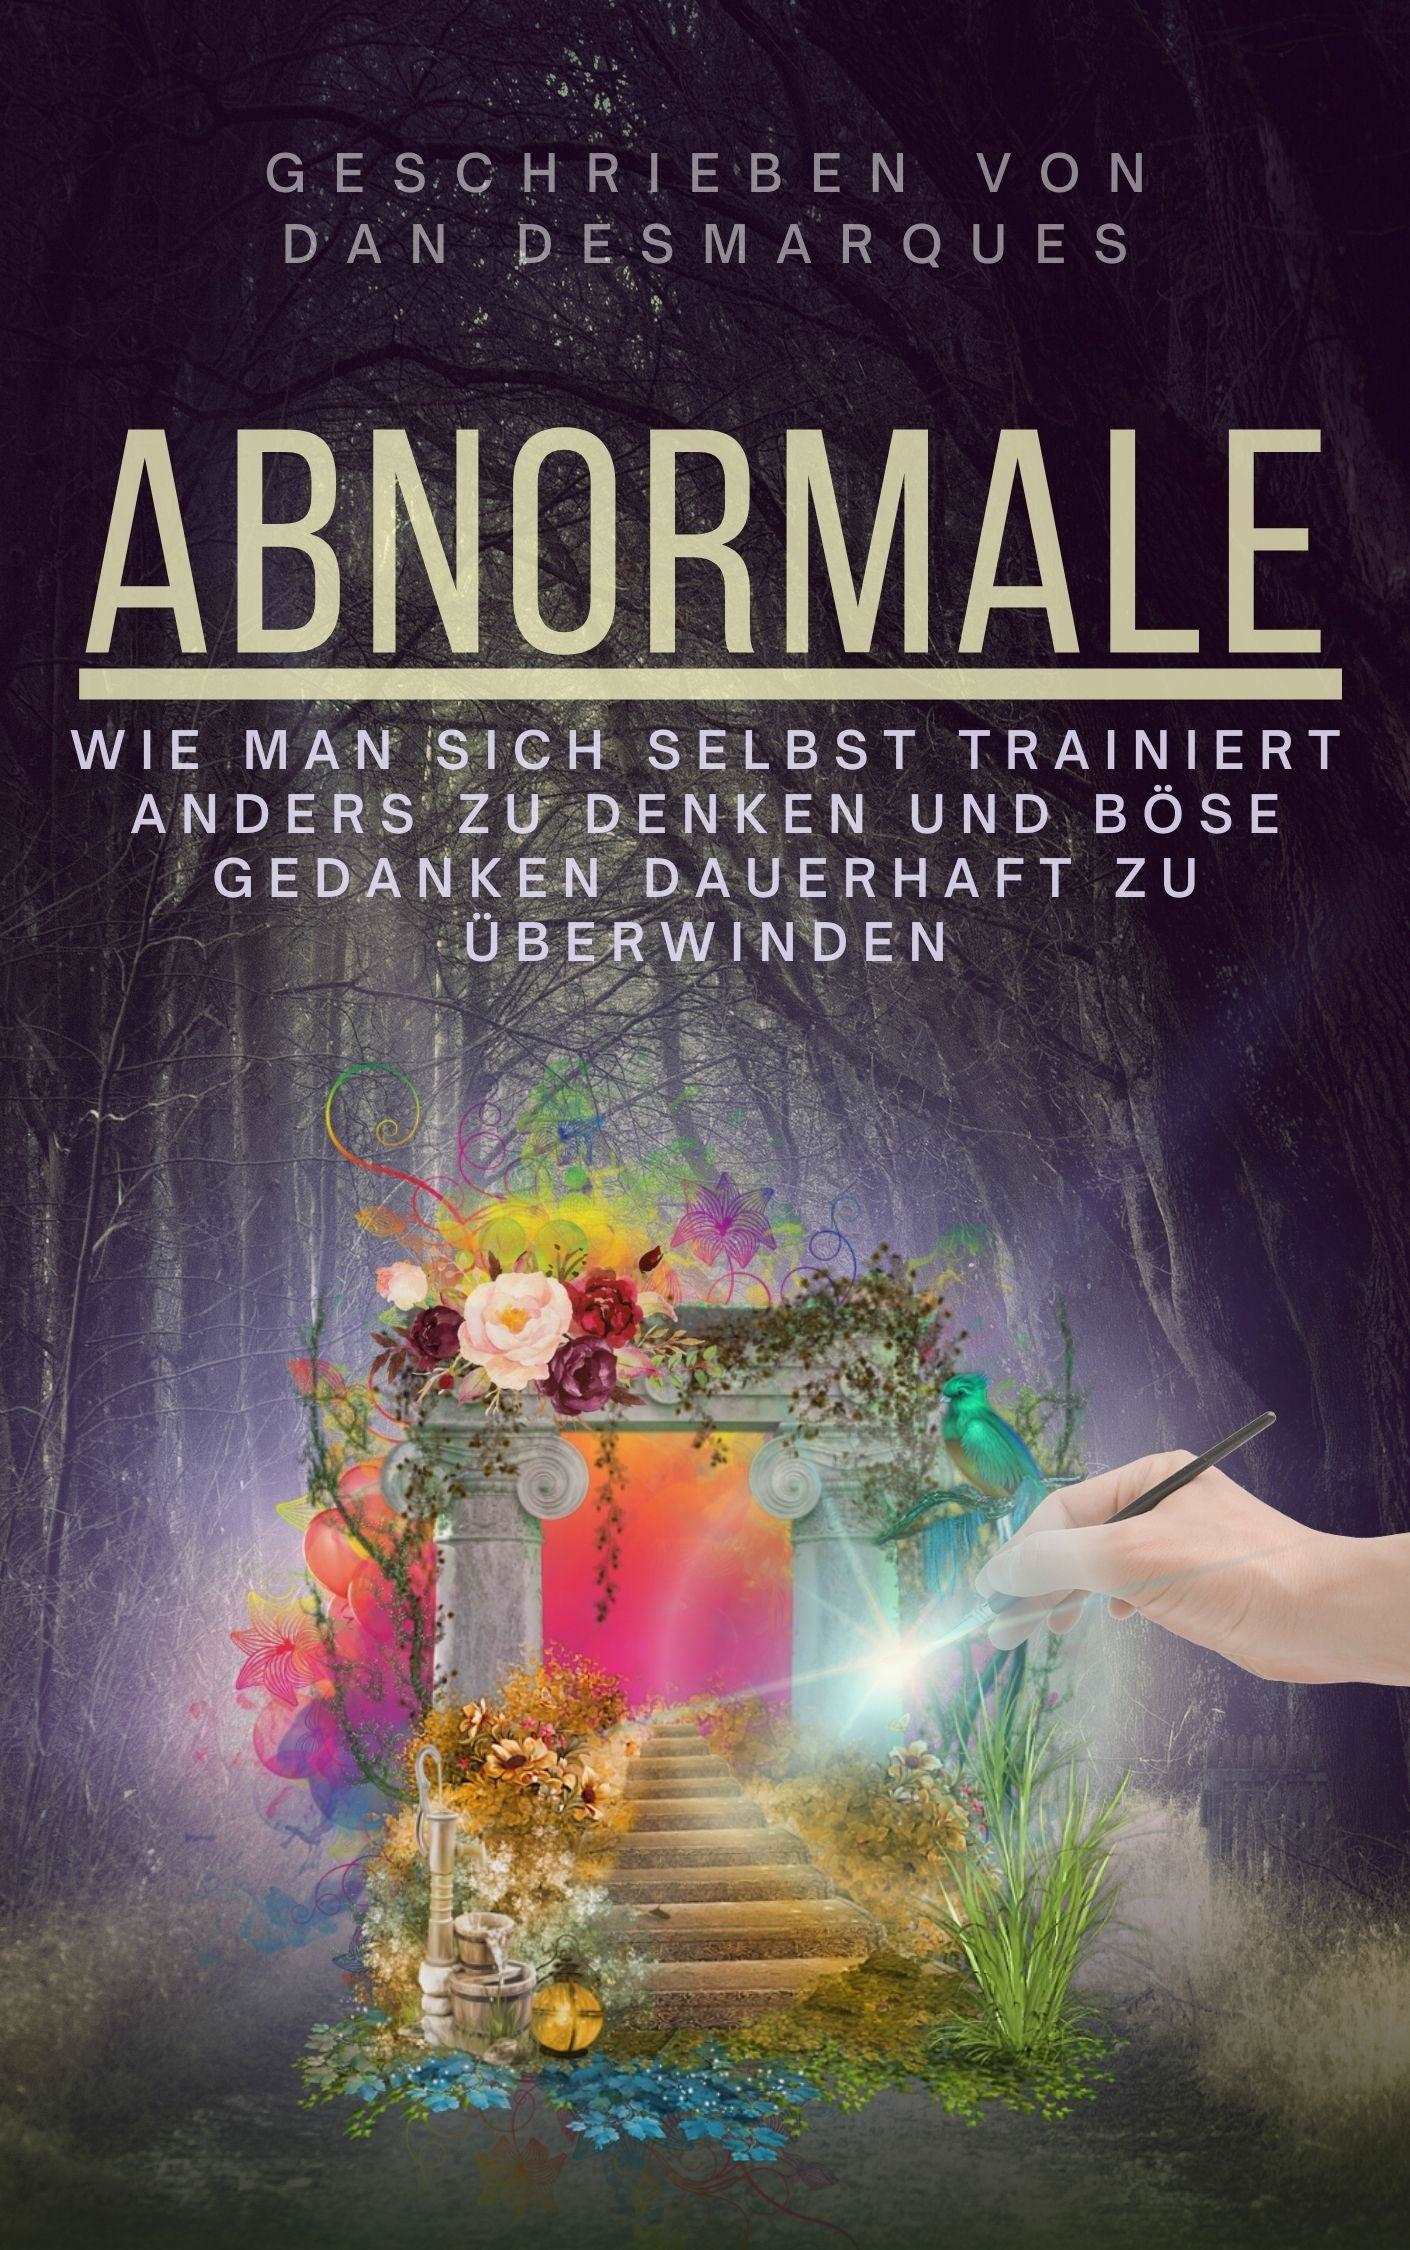 Abnormal German PDF